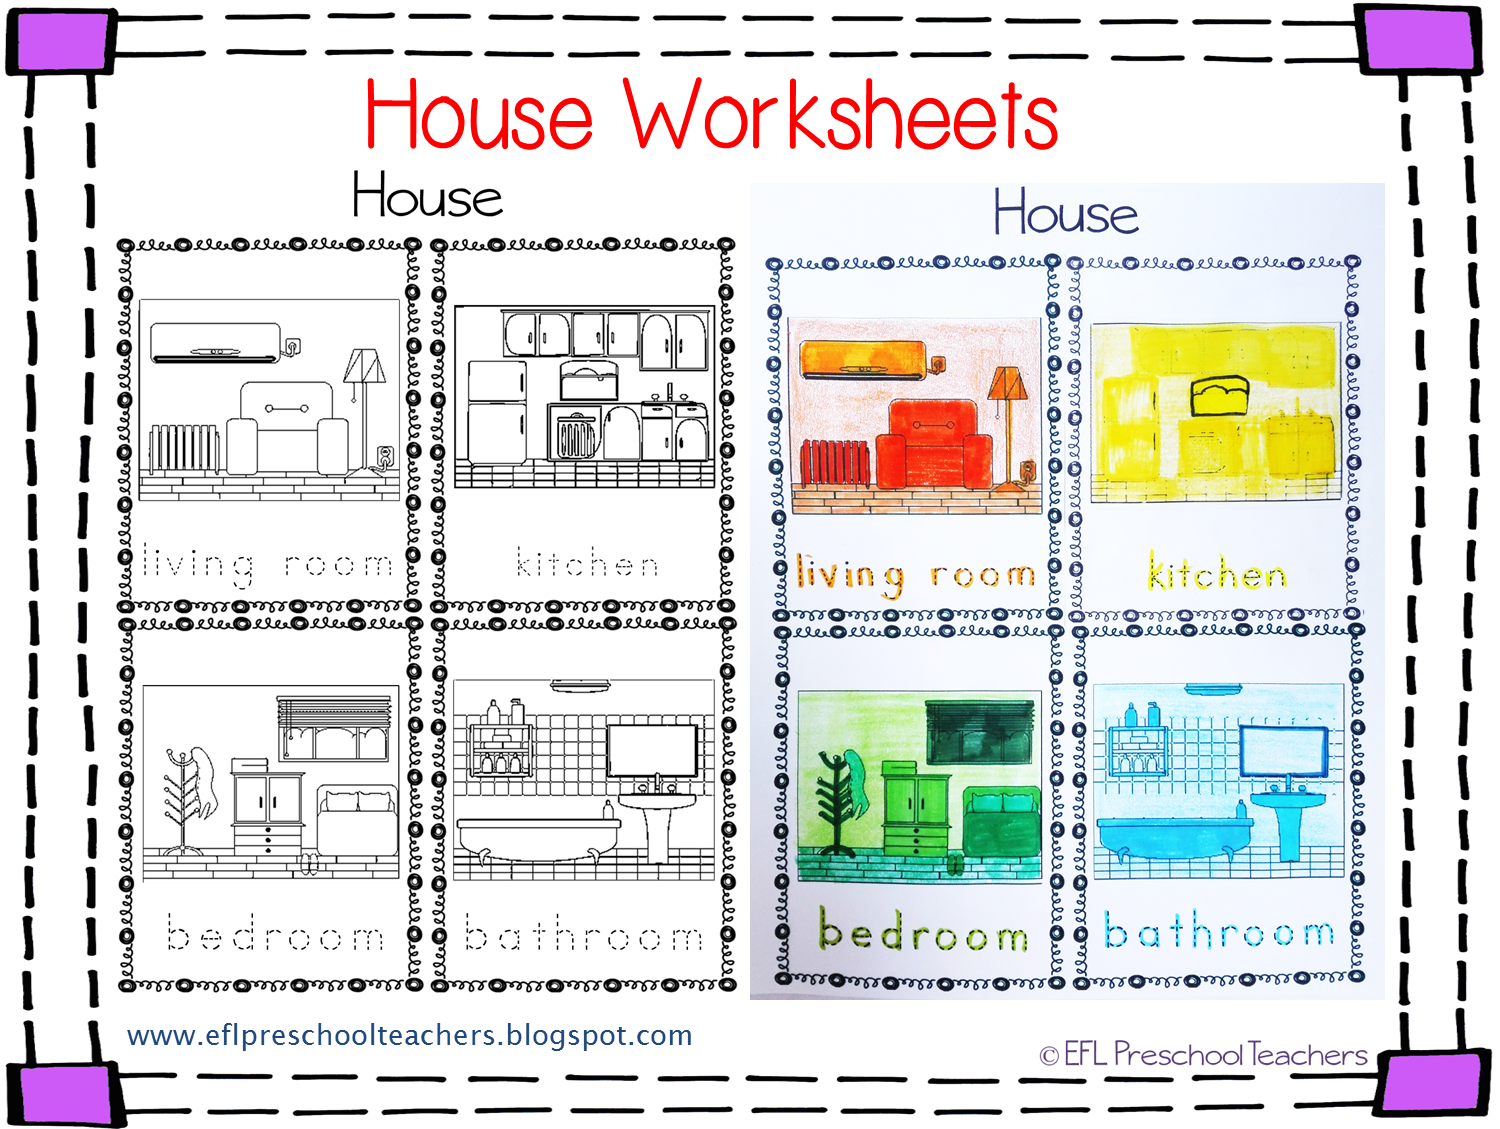 Esl Efl Preschool Teachers House Worksheets For The Preschool Ell